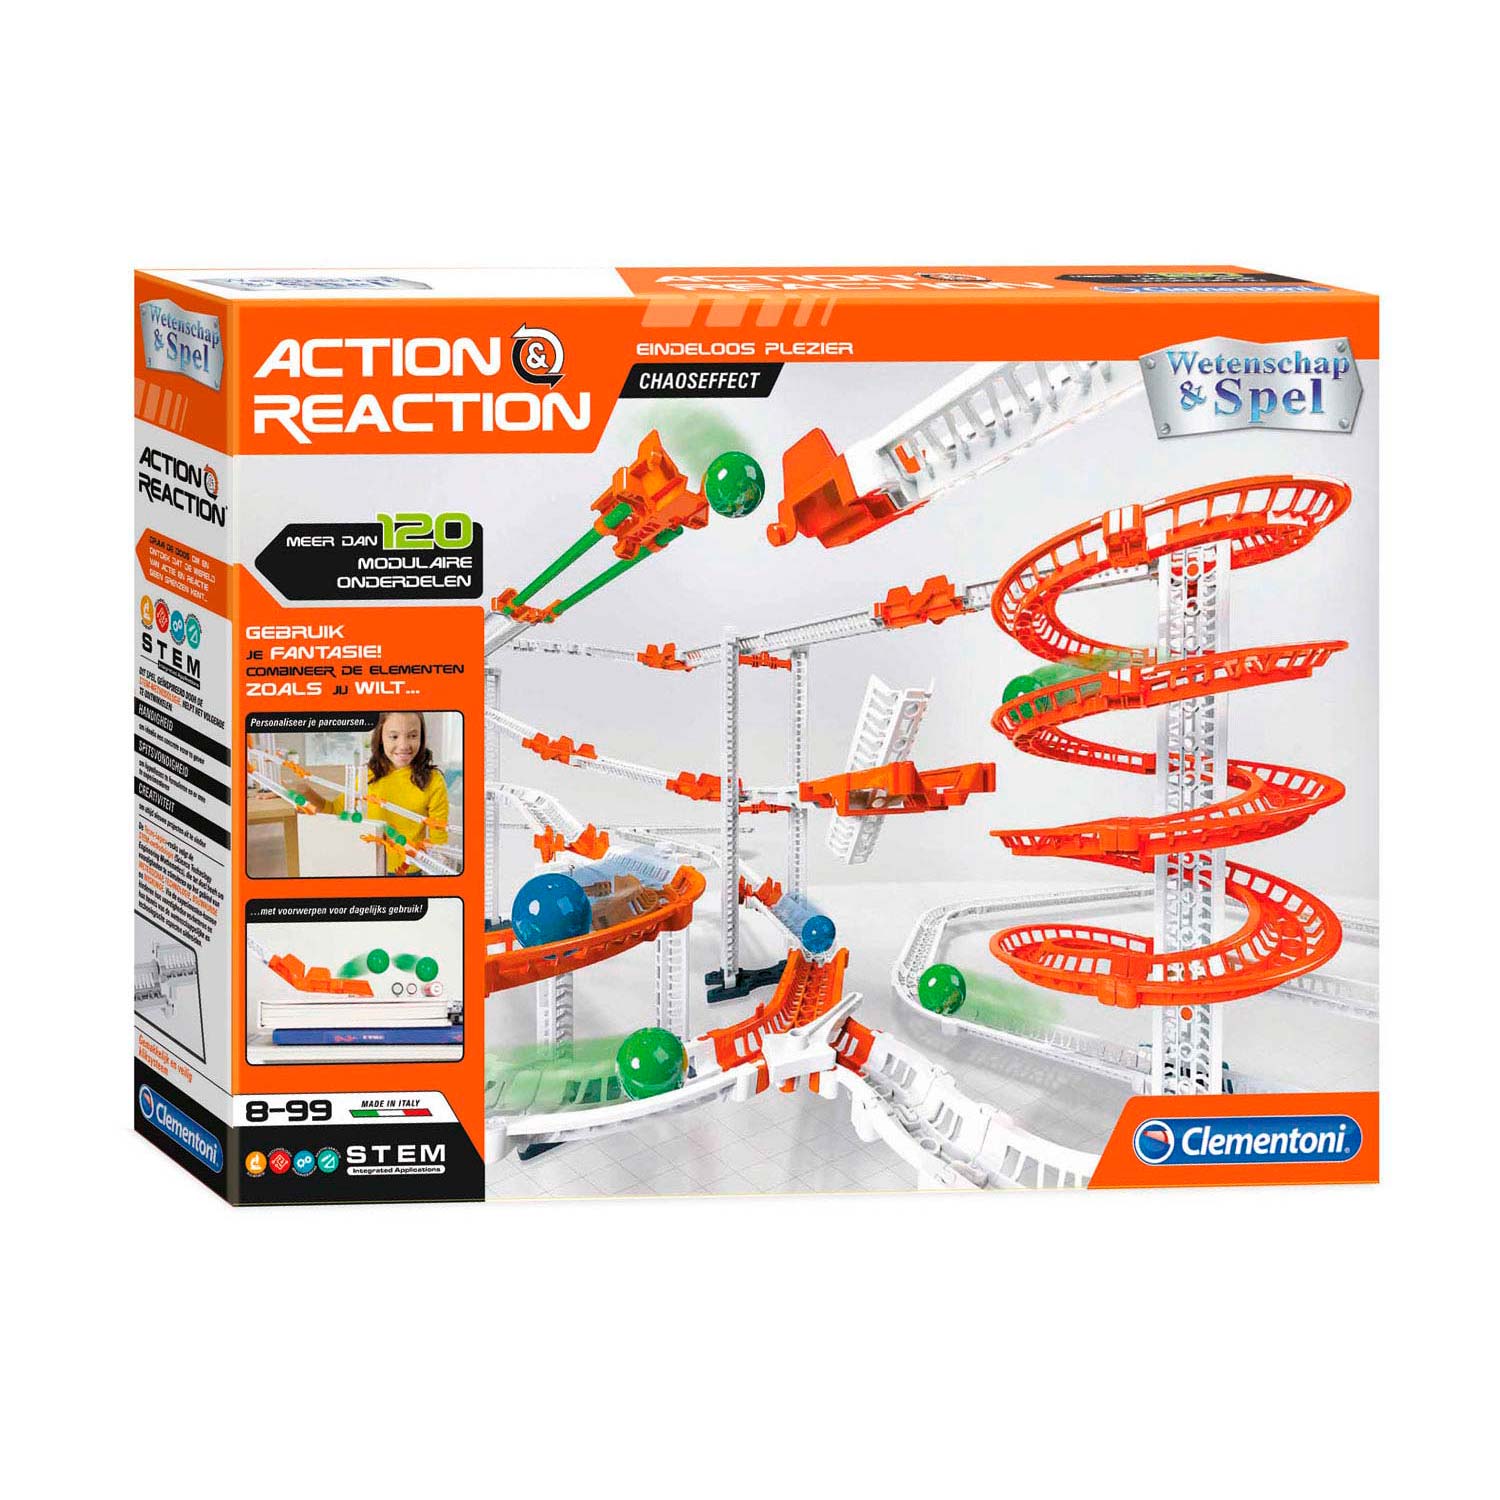 Clementoni Action & Reaction - Chaos Effecten, 120dlg.